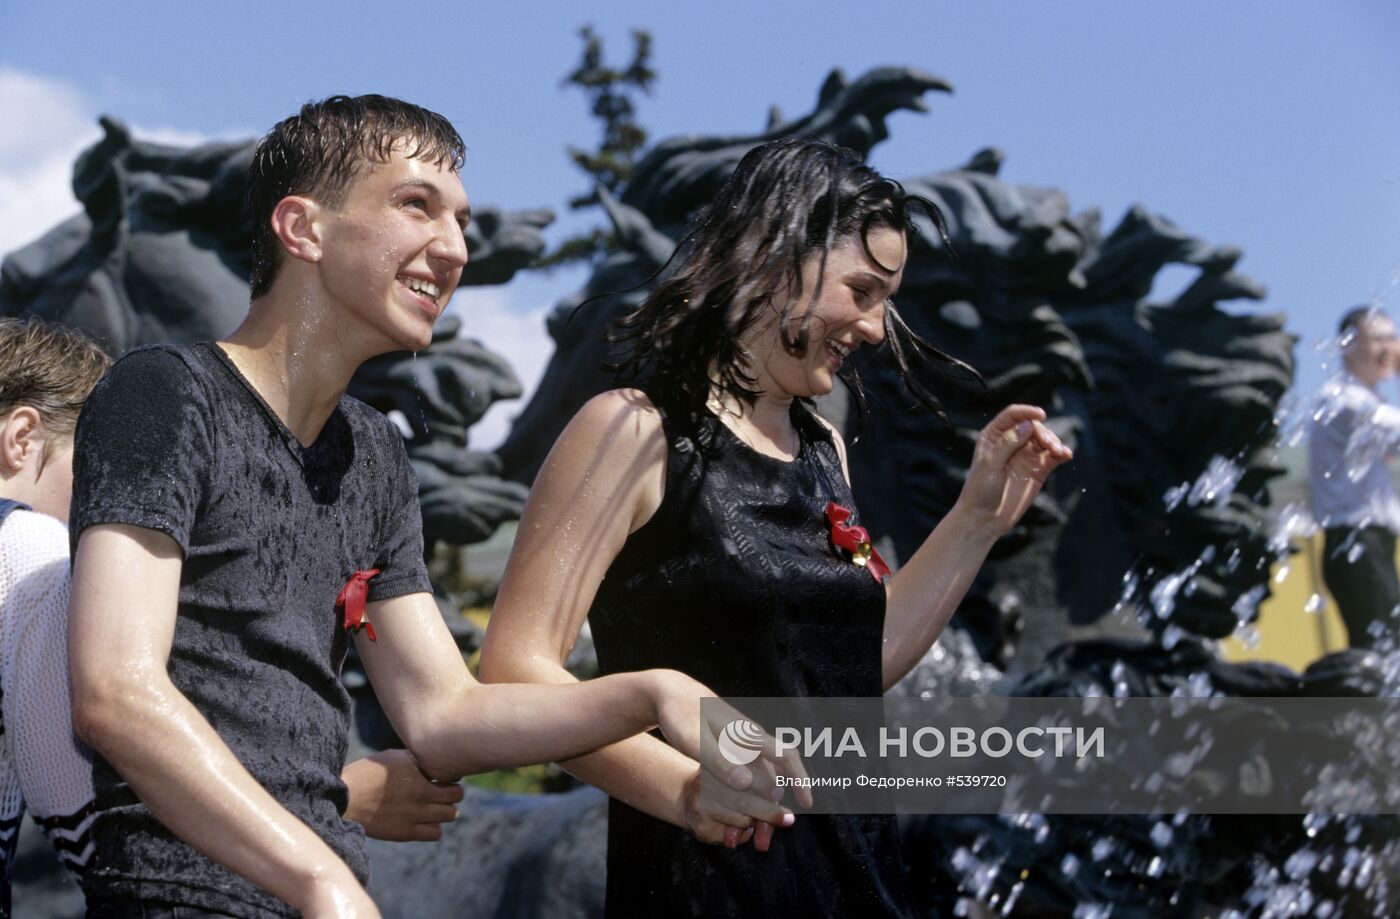 Юноша и девушка около фонтана